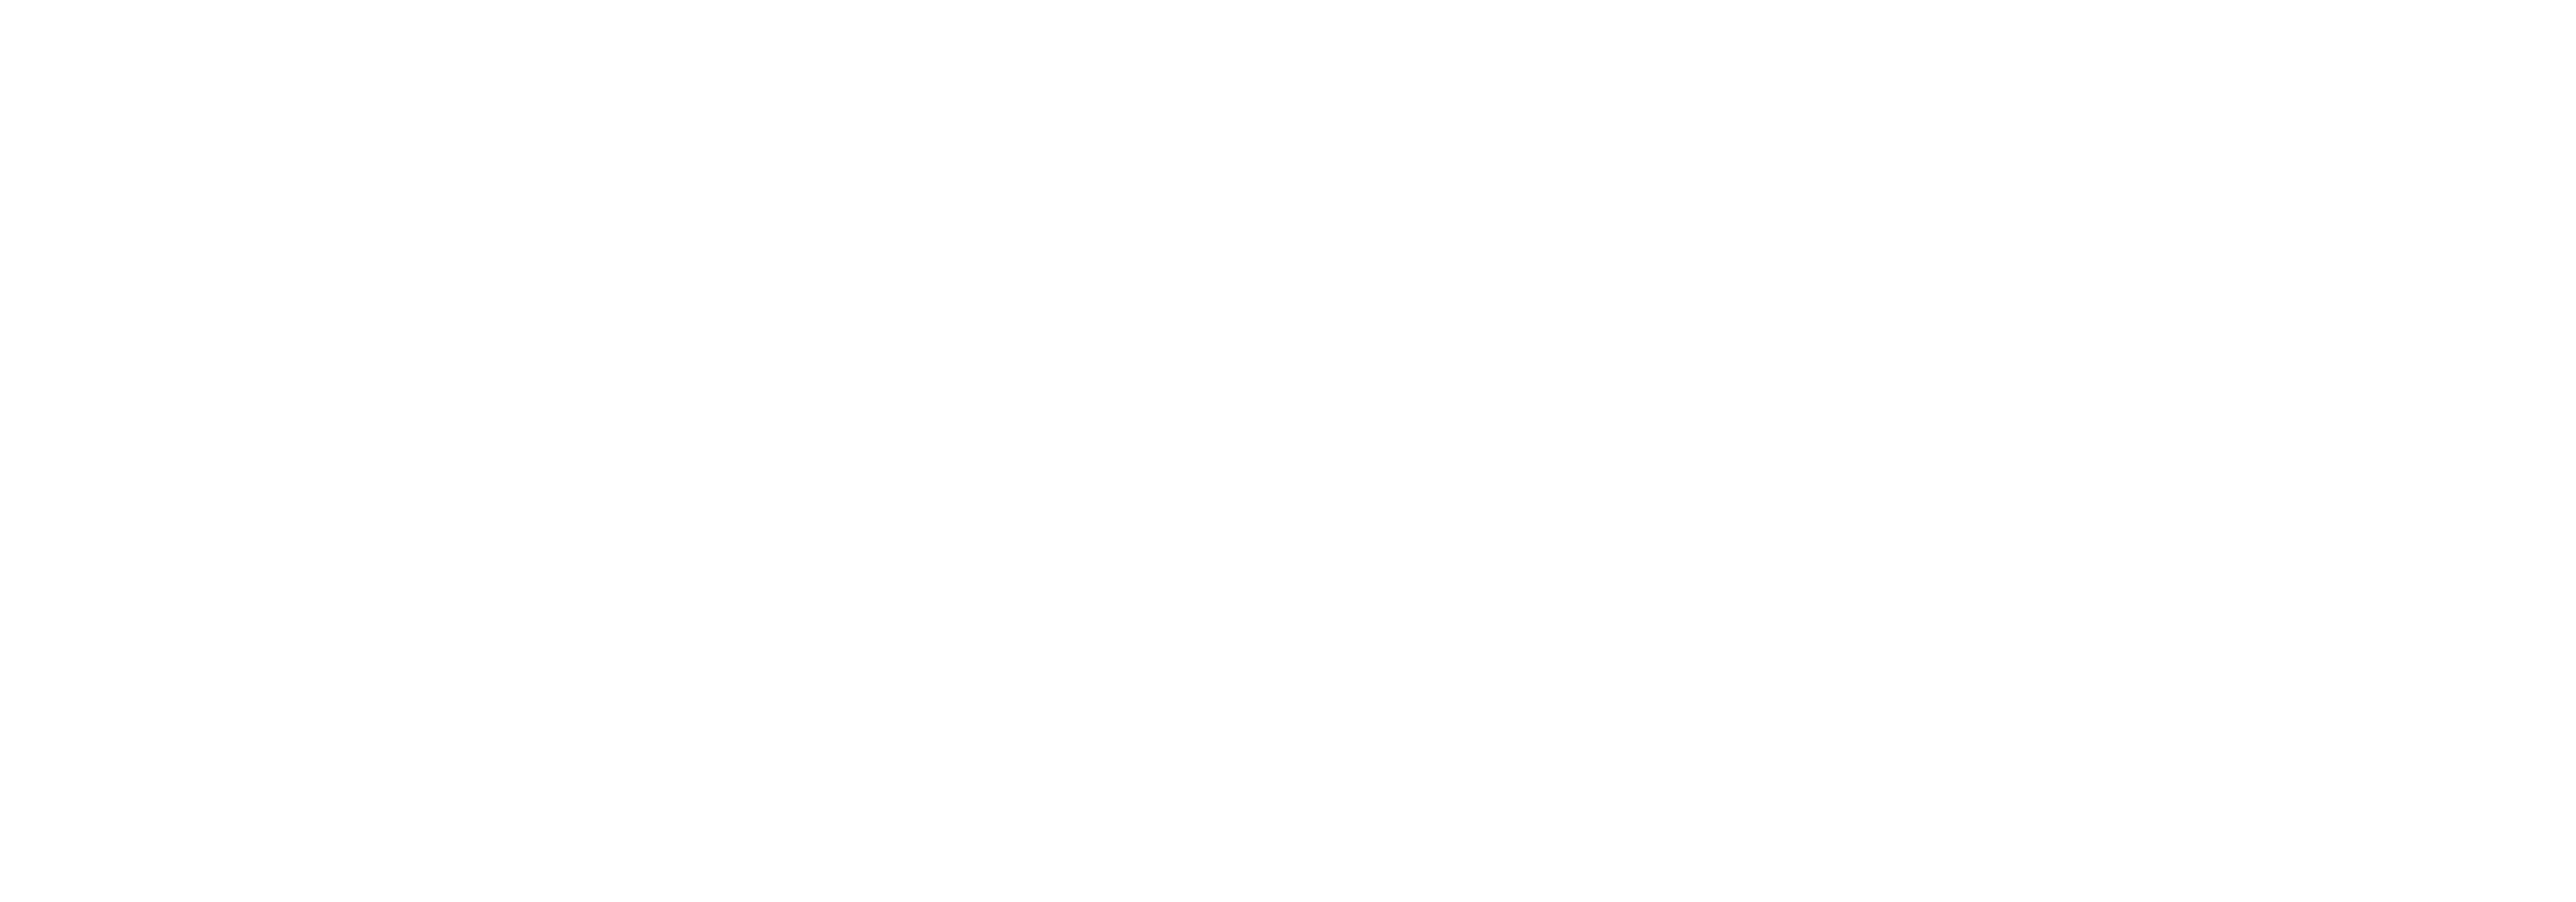 Netfolios-Horizontal-White-PNG